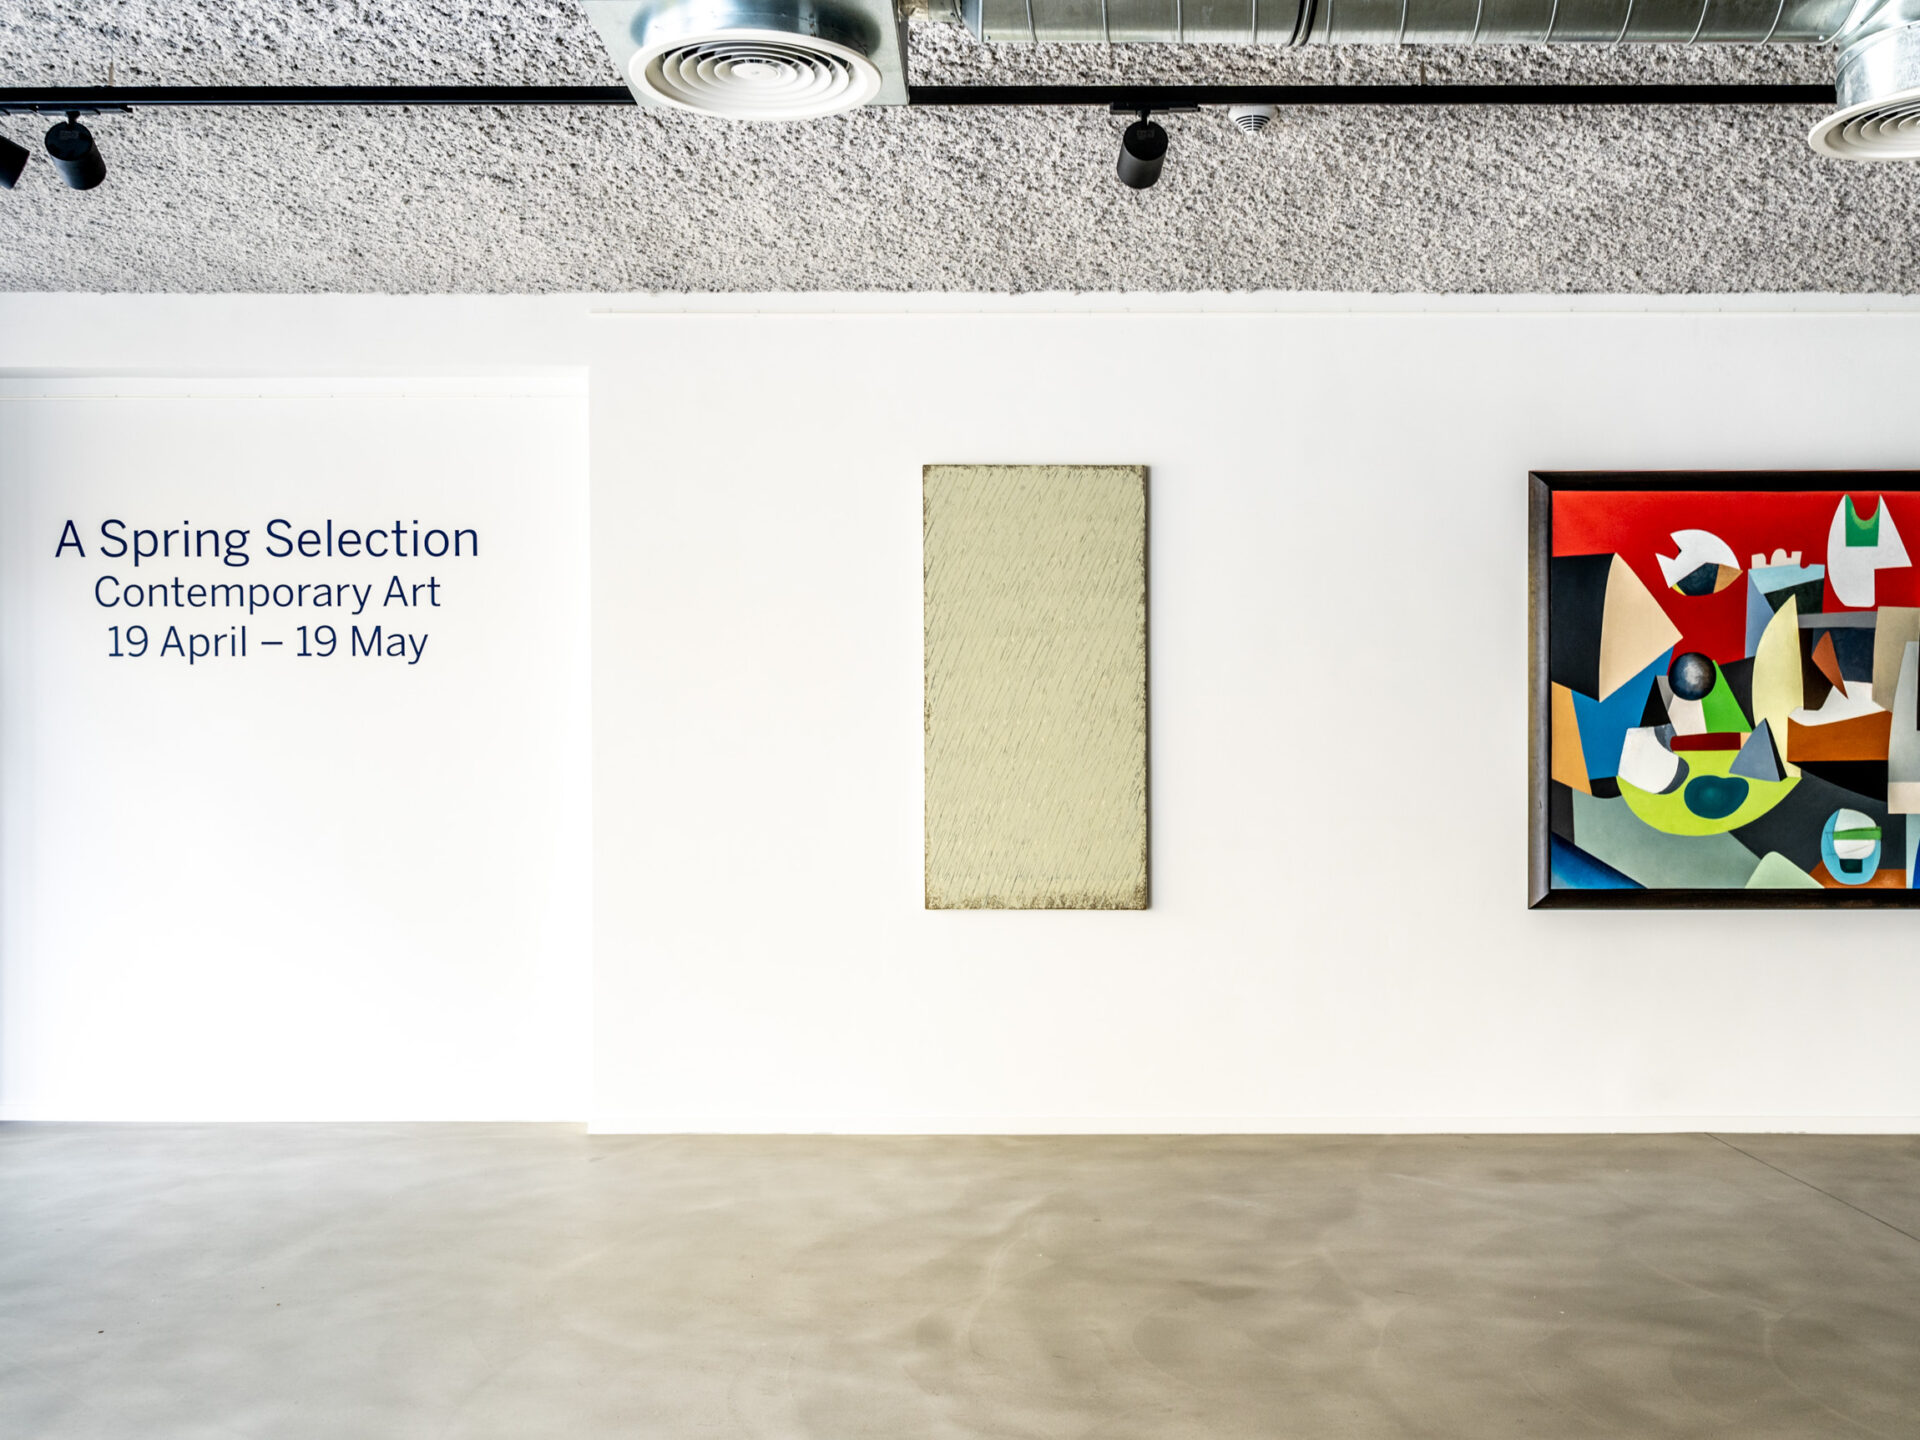 Belgium Sothebys Int. Realty A Spring Selection NL